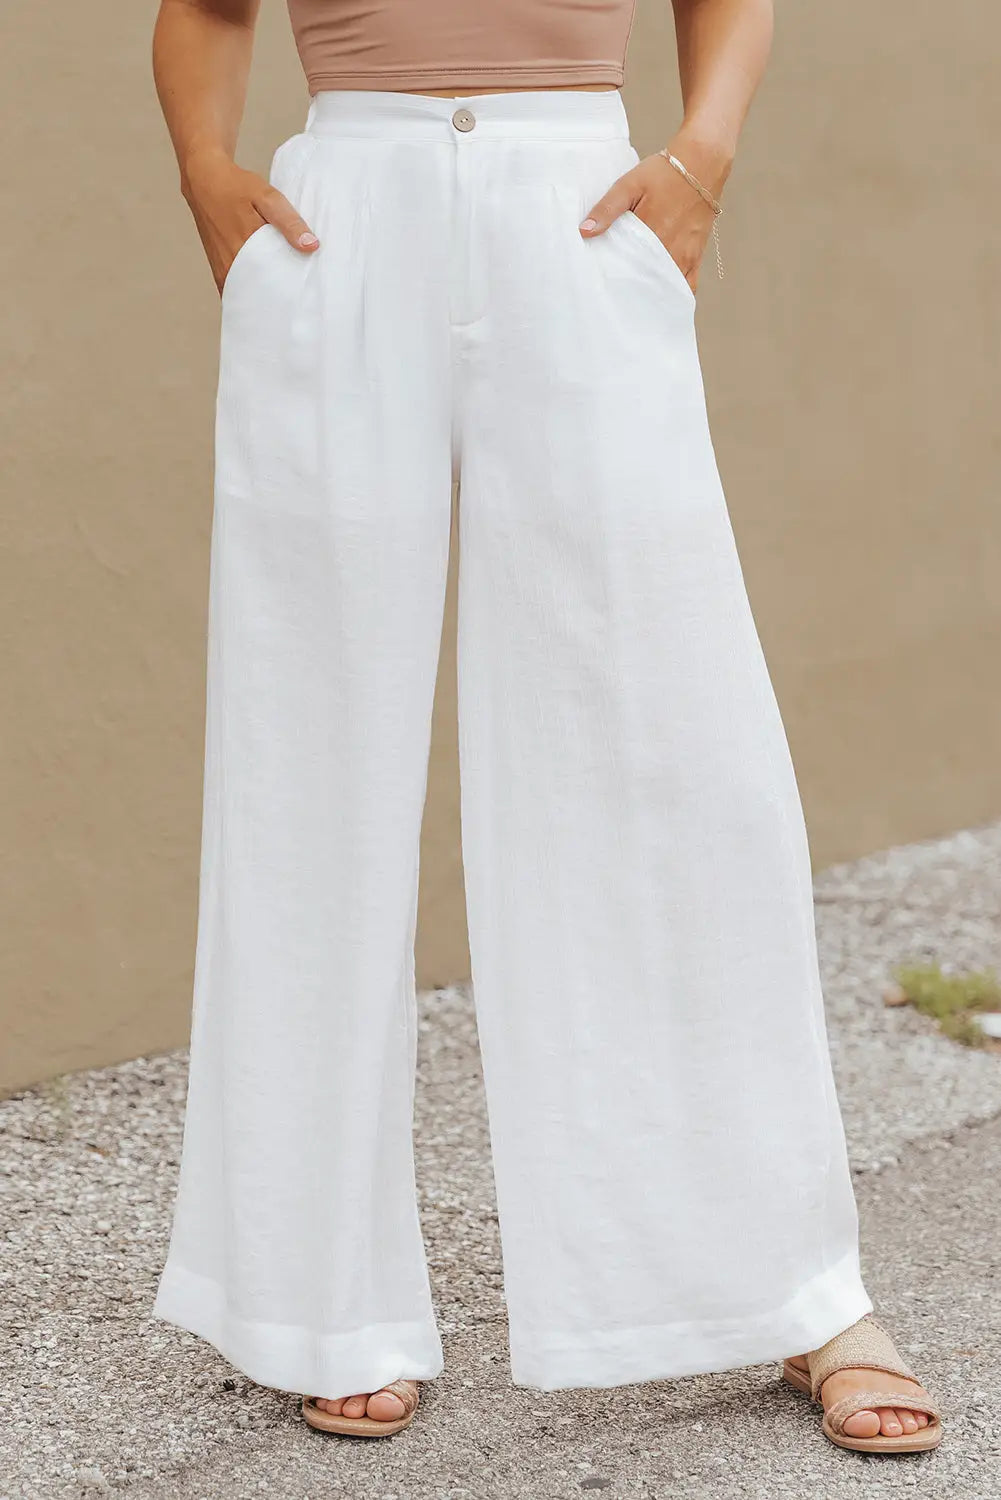 White solid color elastic waist pleated wide leg pants - s / 80% viscose + 20% linen